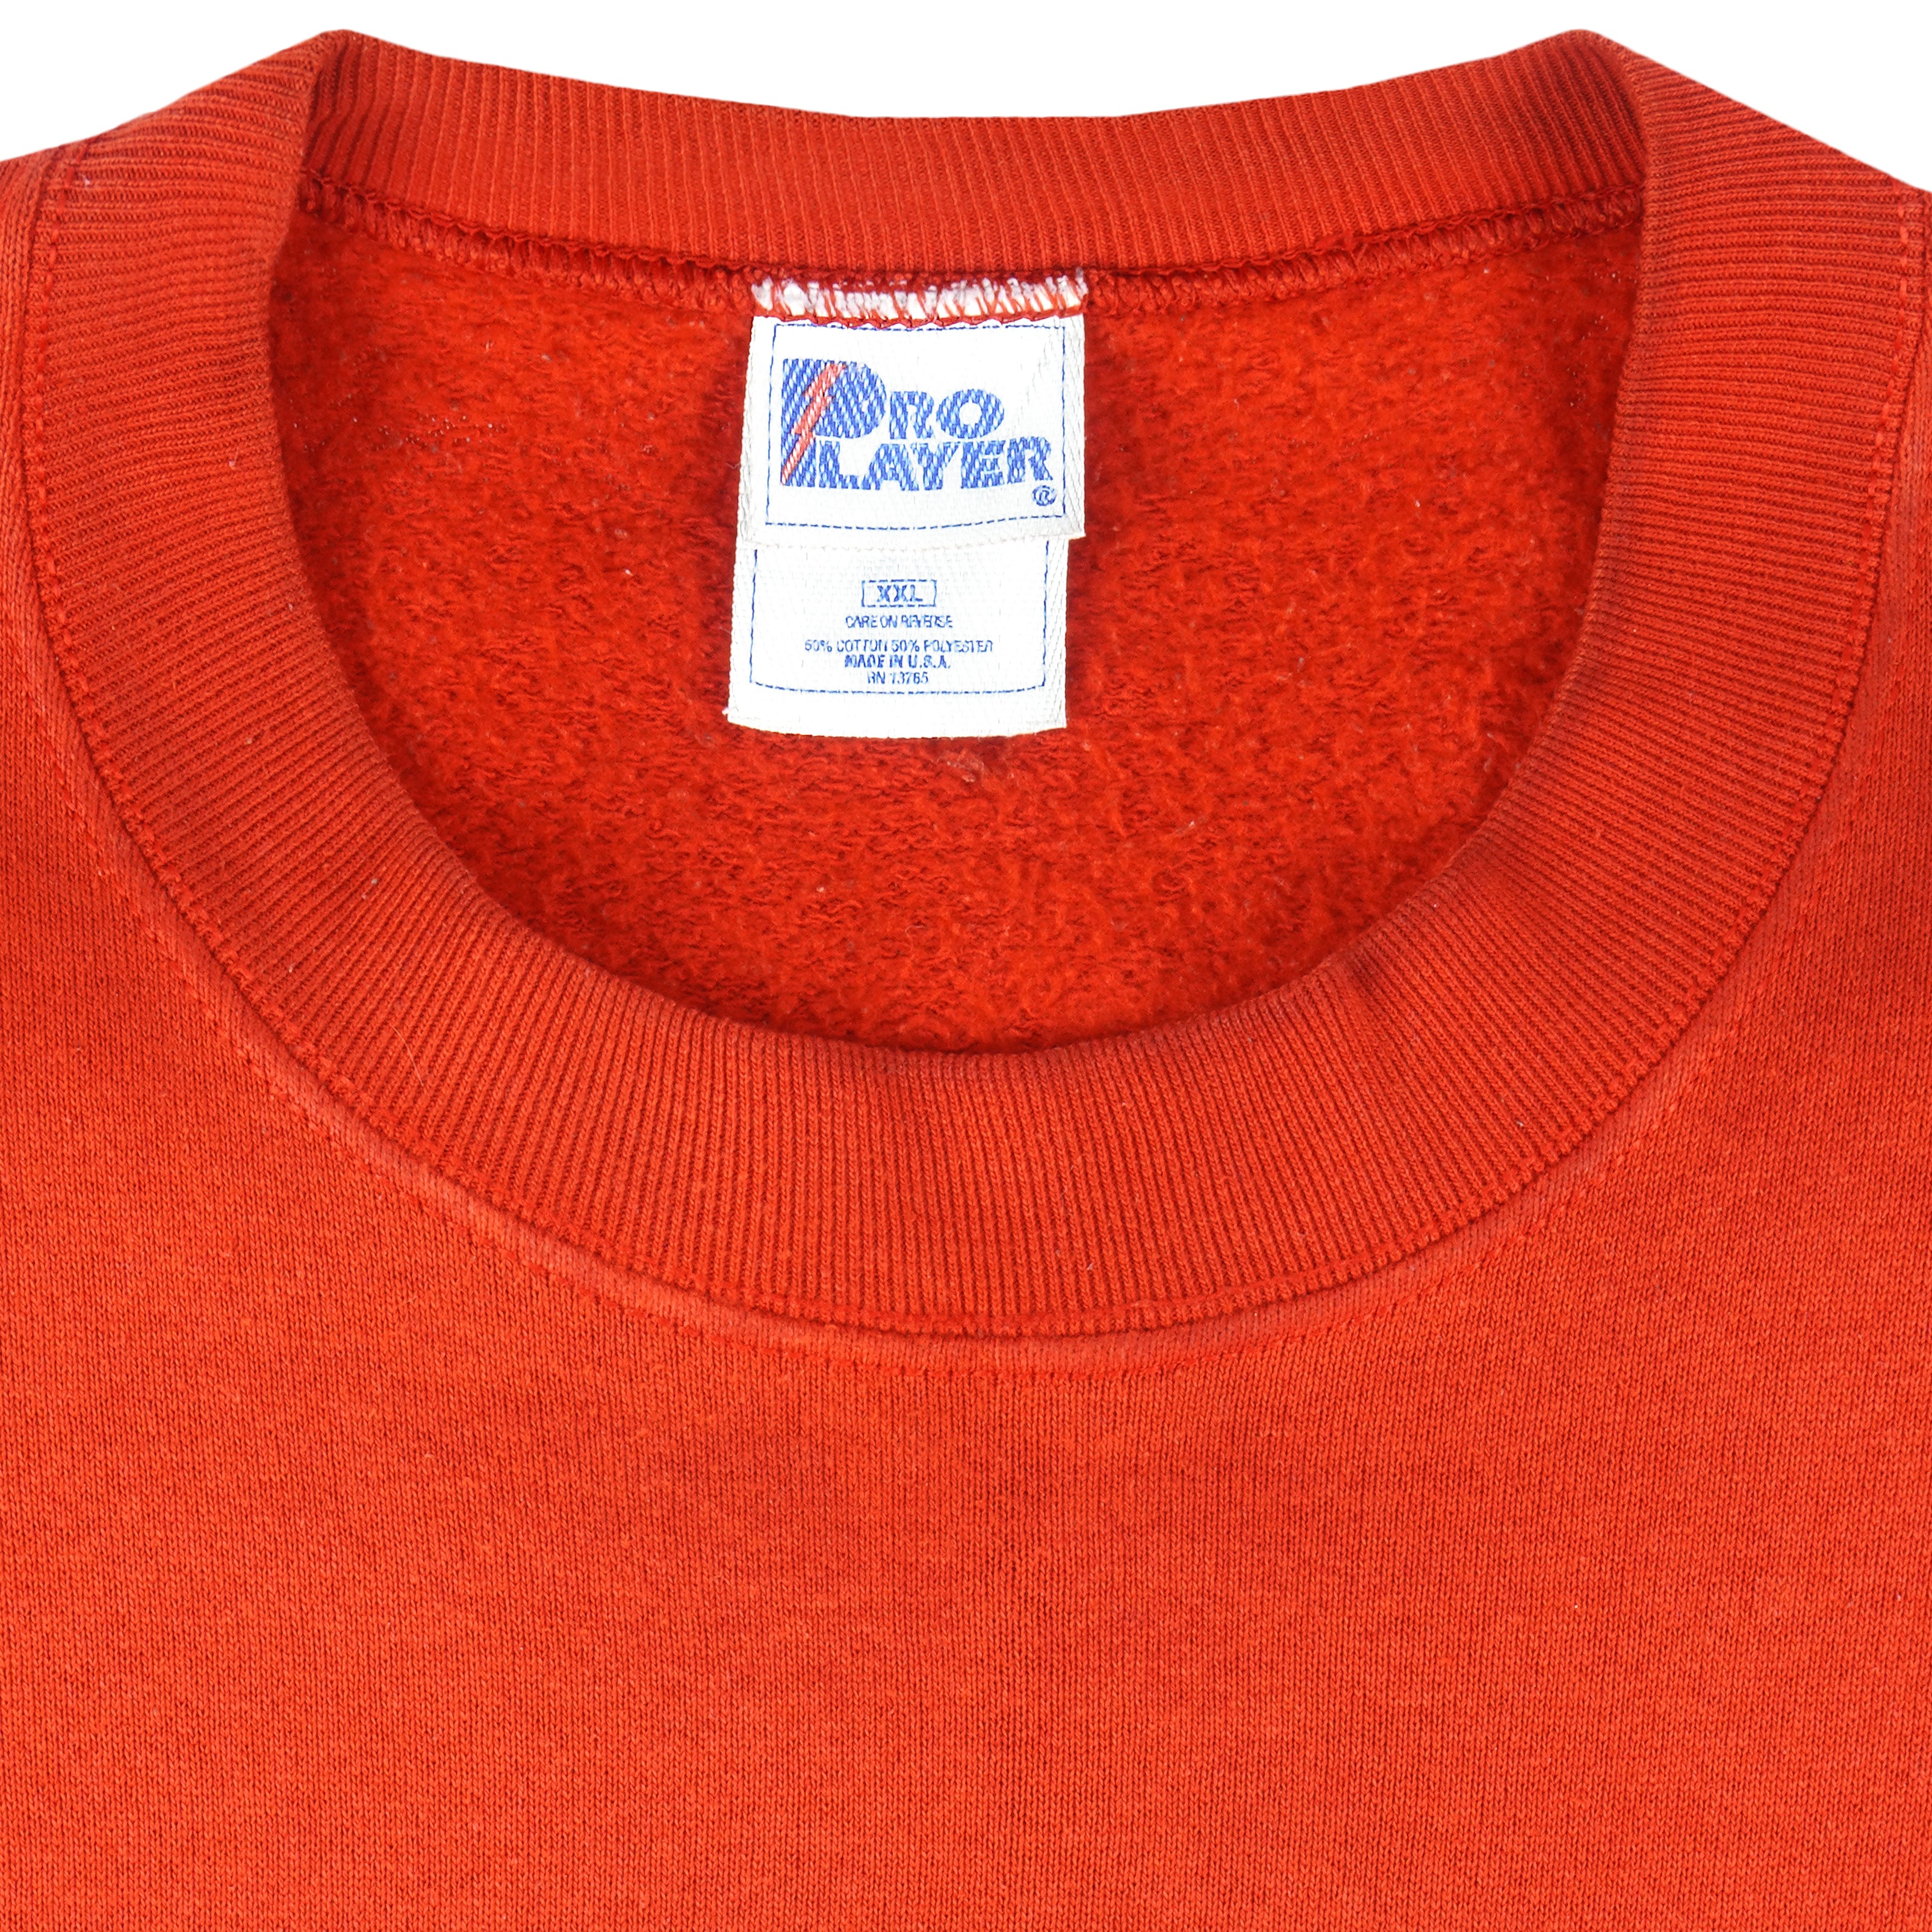 Vintage NFL (Pro Player) - Kansas City Chiefs Embroidered Sweatshirt 1990s  XX-Large – Vintage Club Clothing